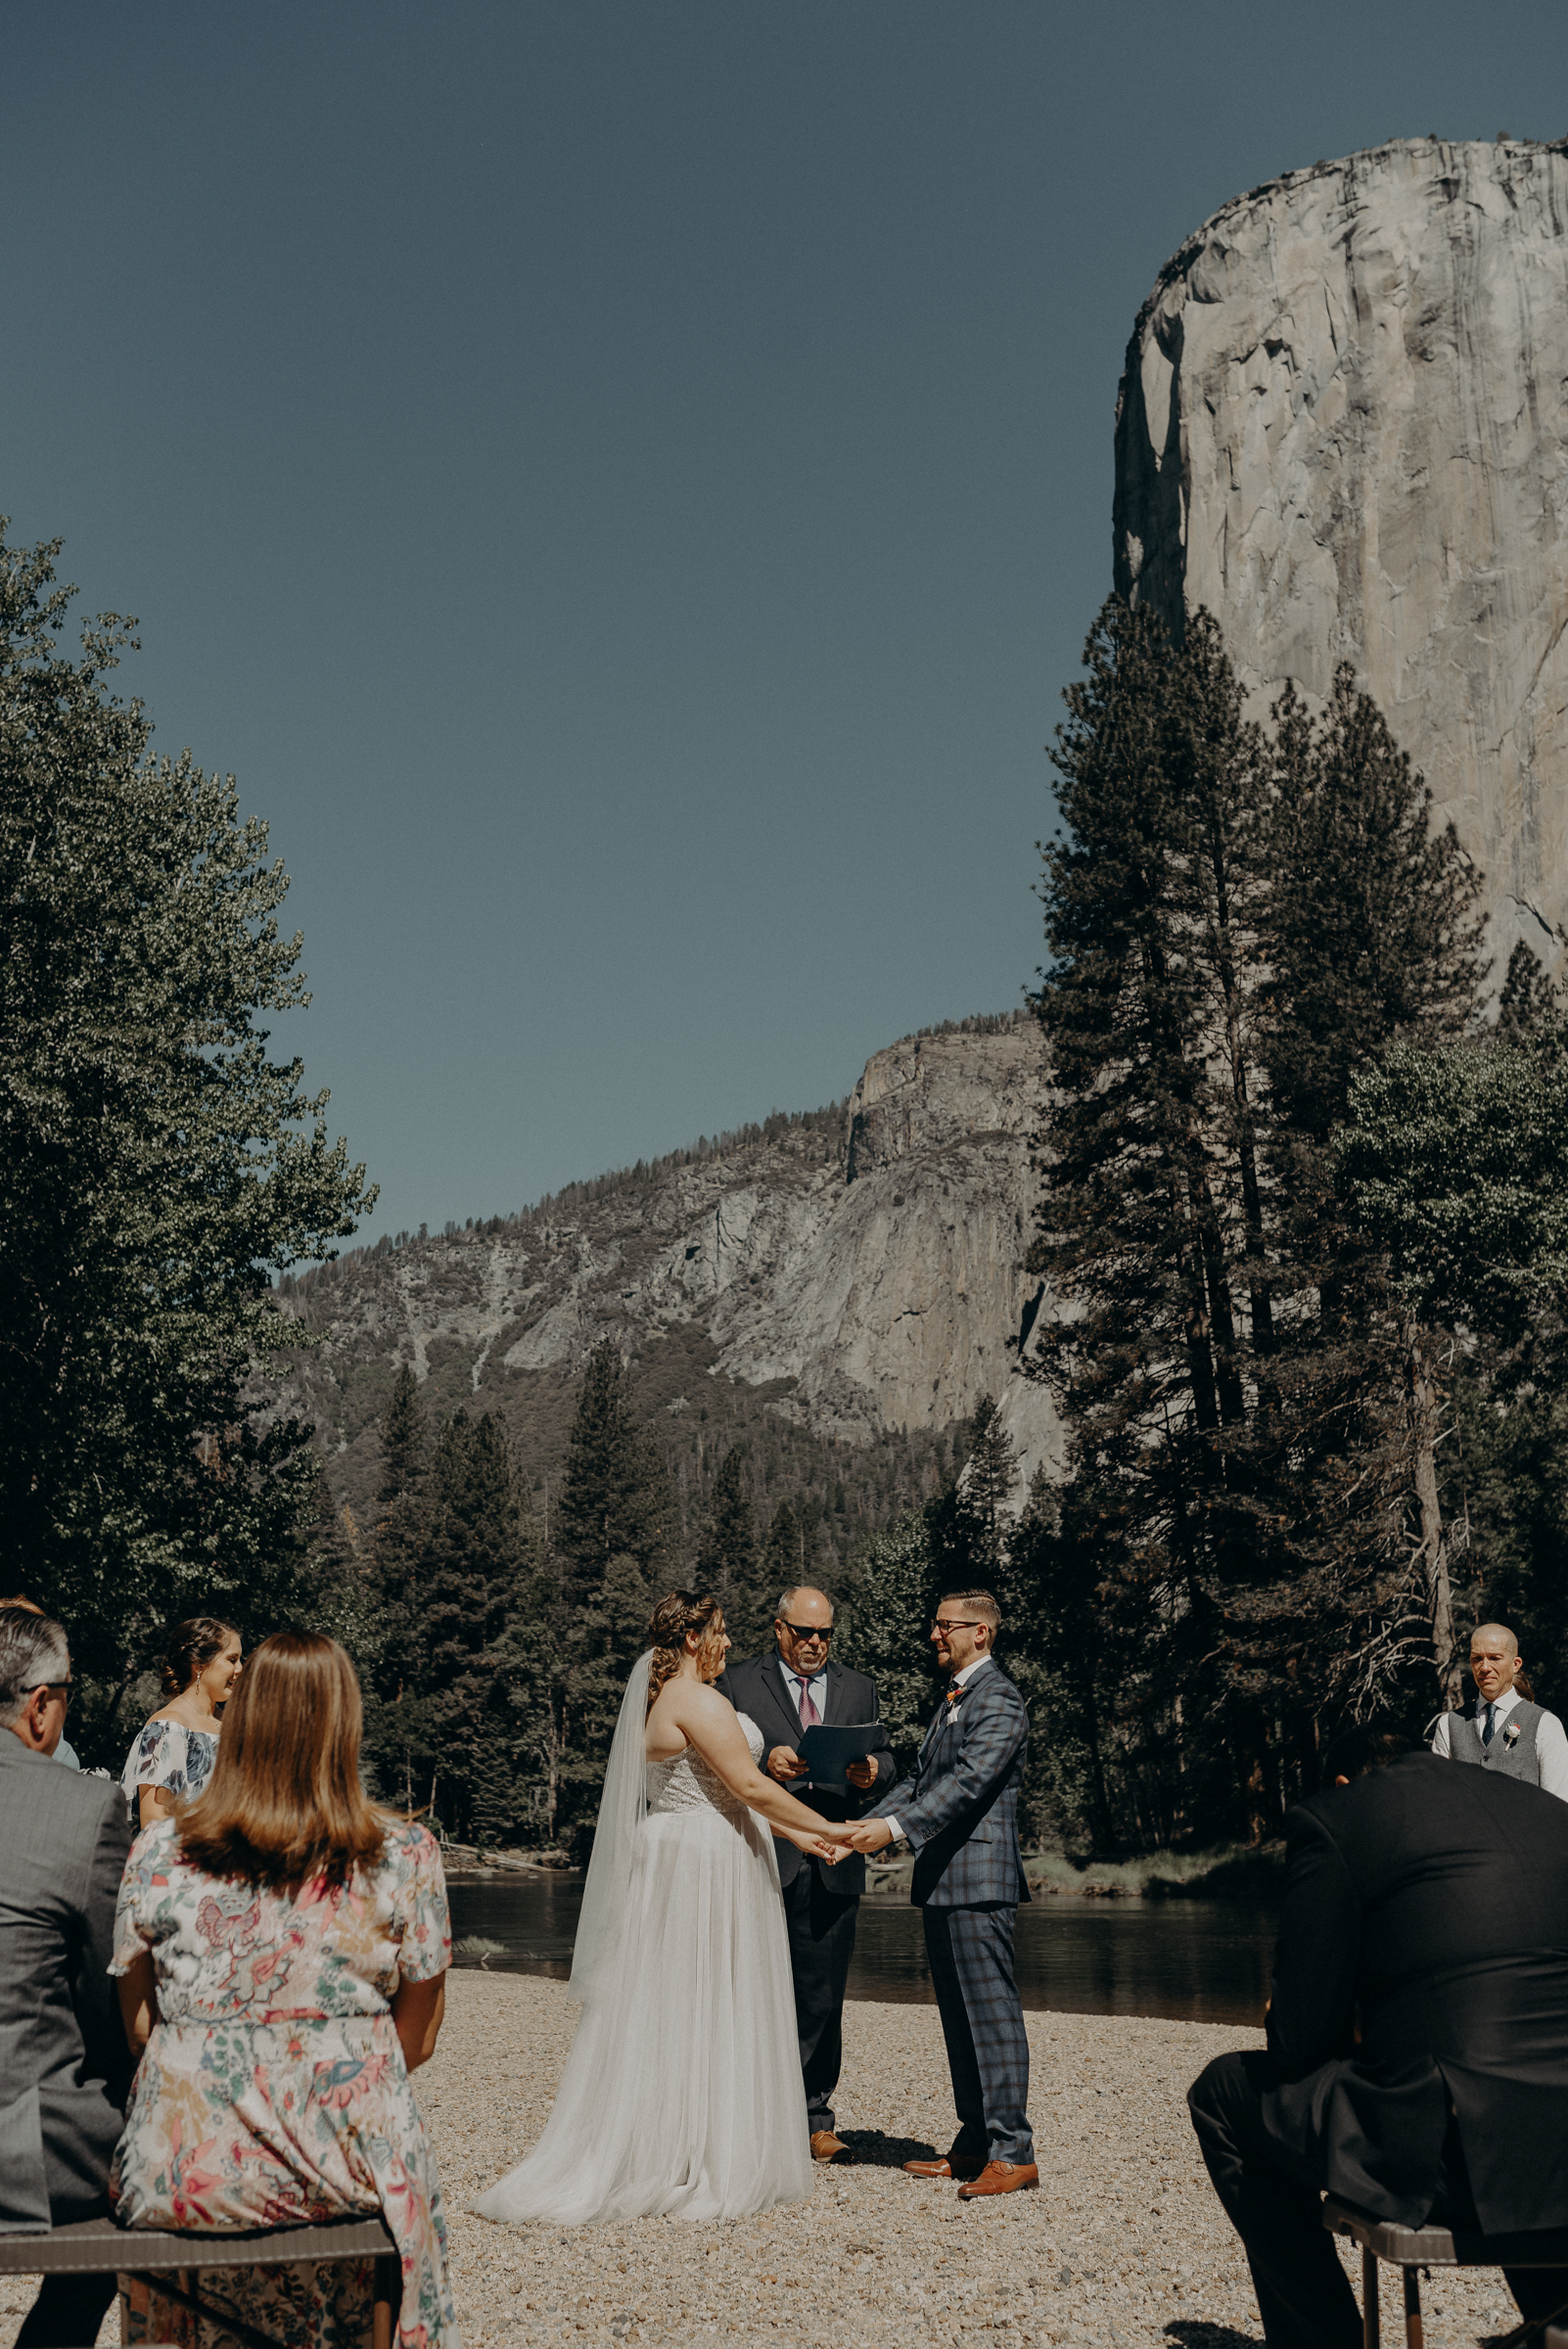 Los Angeles Wedding Photographers - Yosemite Destination Wedding Elopement - IsaiahAndTaylor.com -047.jpg